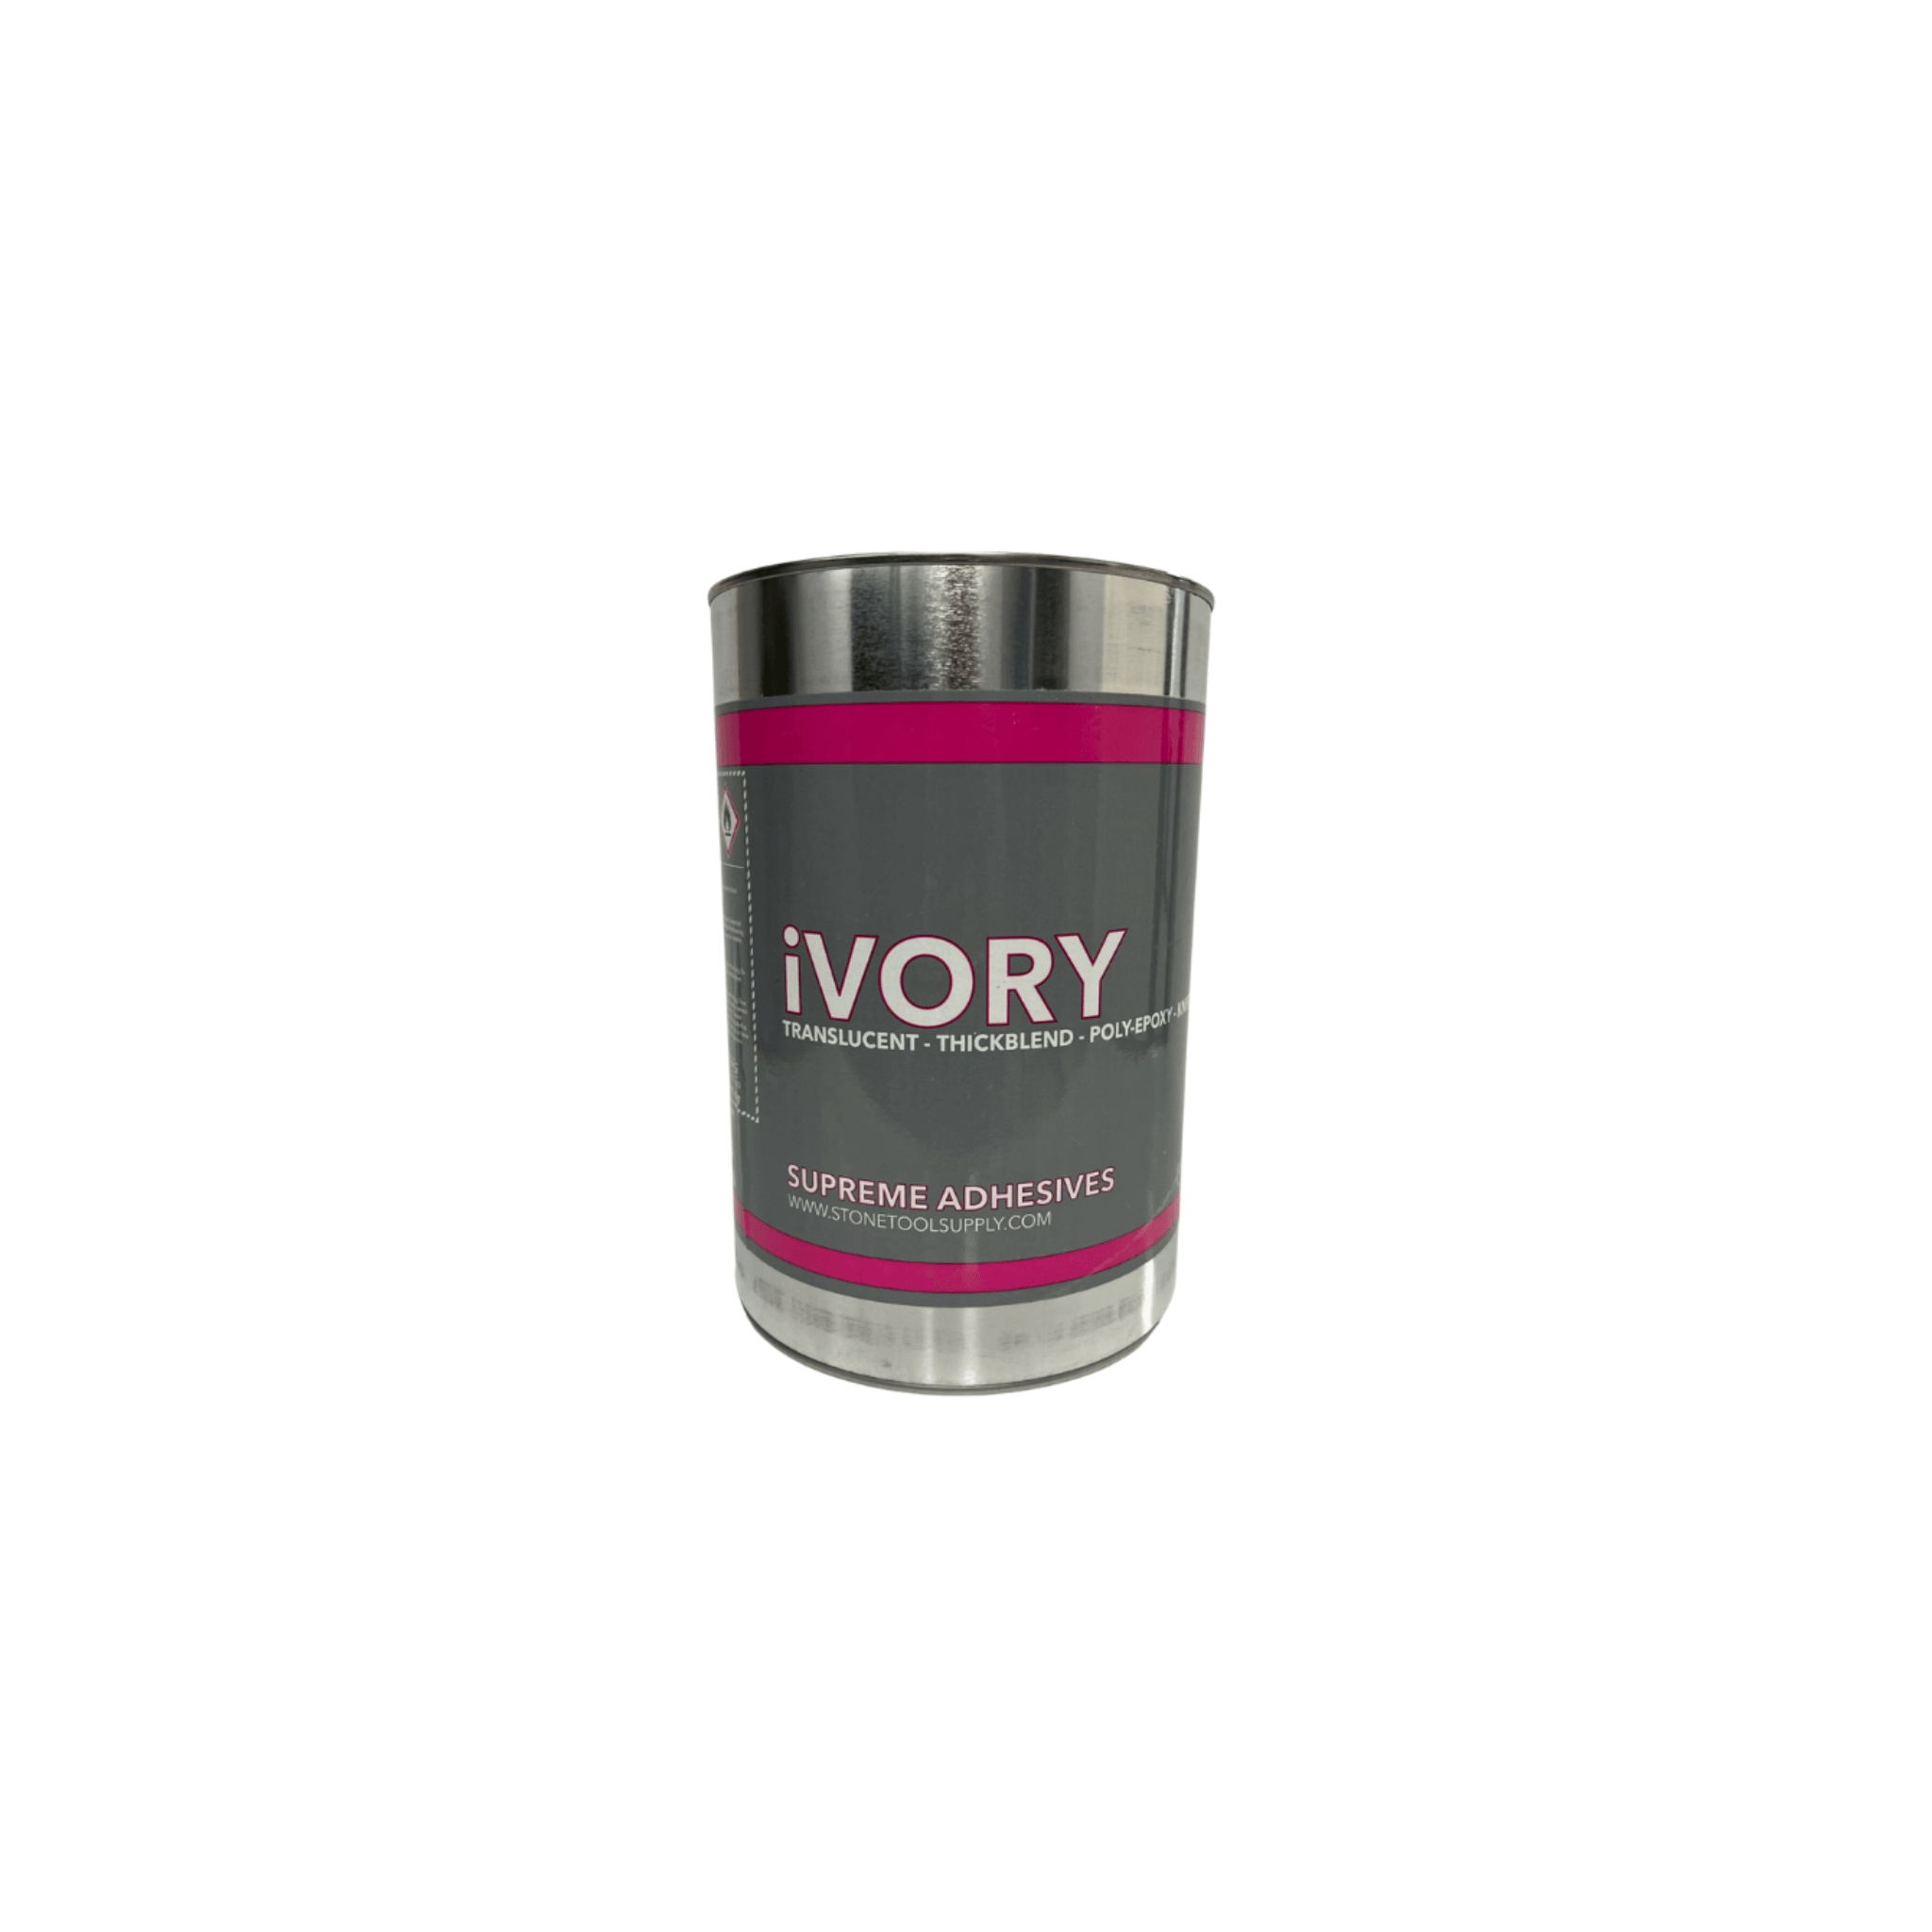 Supreme Adhesives Ivory Poly-Epoxy- 1.25 Gallon - Direct Stone Tool Supply, Inc